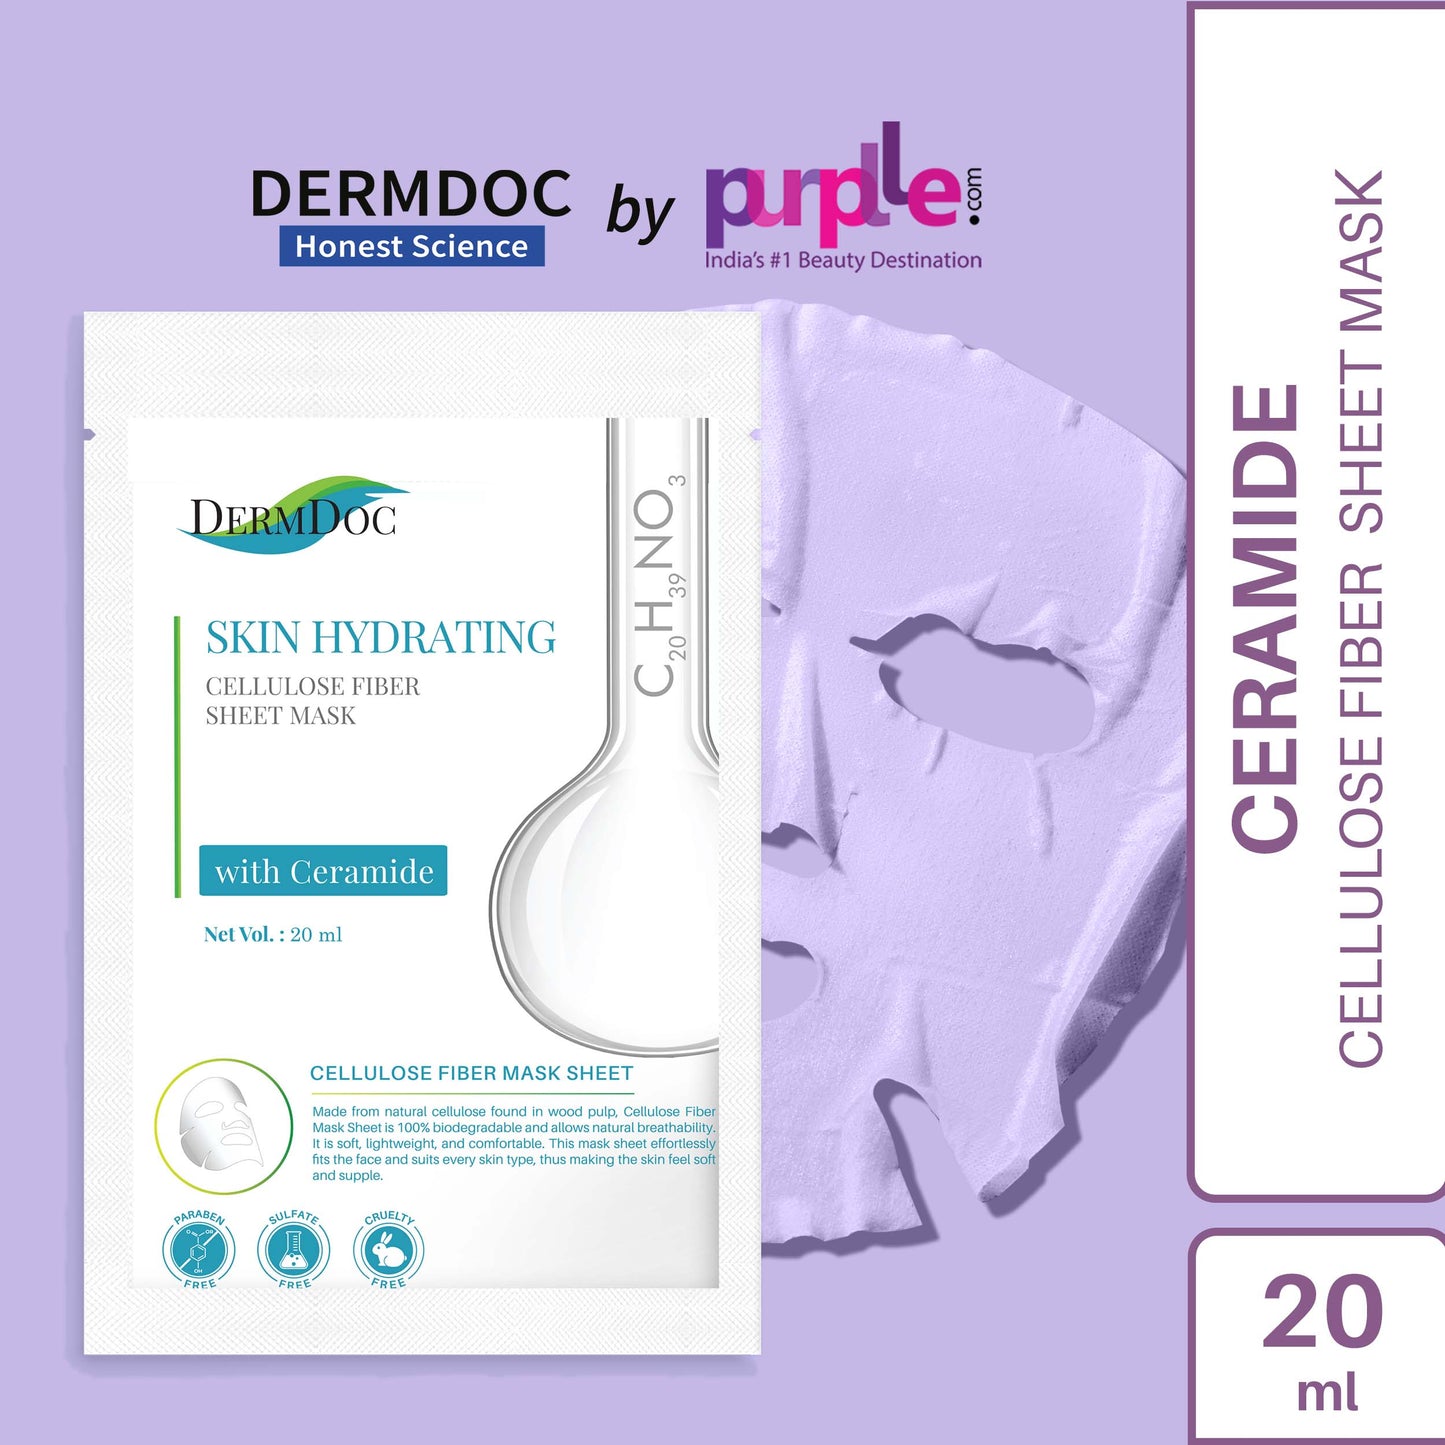 DermDoc Skin Hydrating Cellulose Fiber Sheet Mask with Ceramides (20 ml)